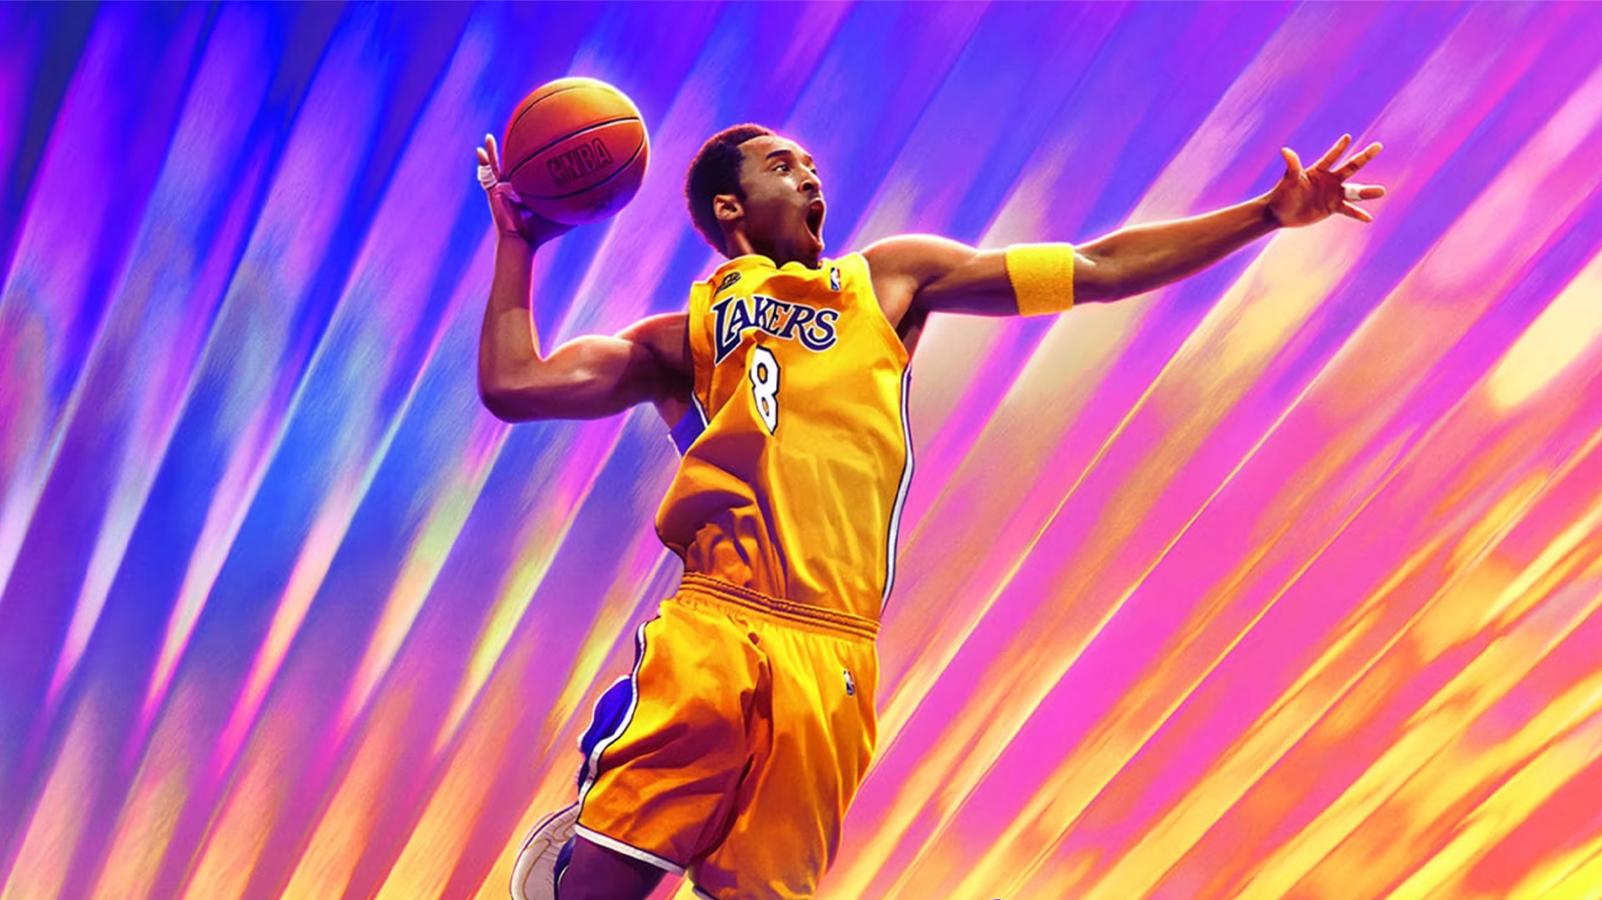 NBA 2K24 cover art